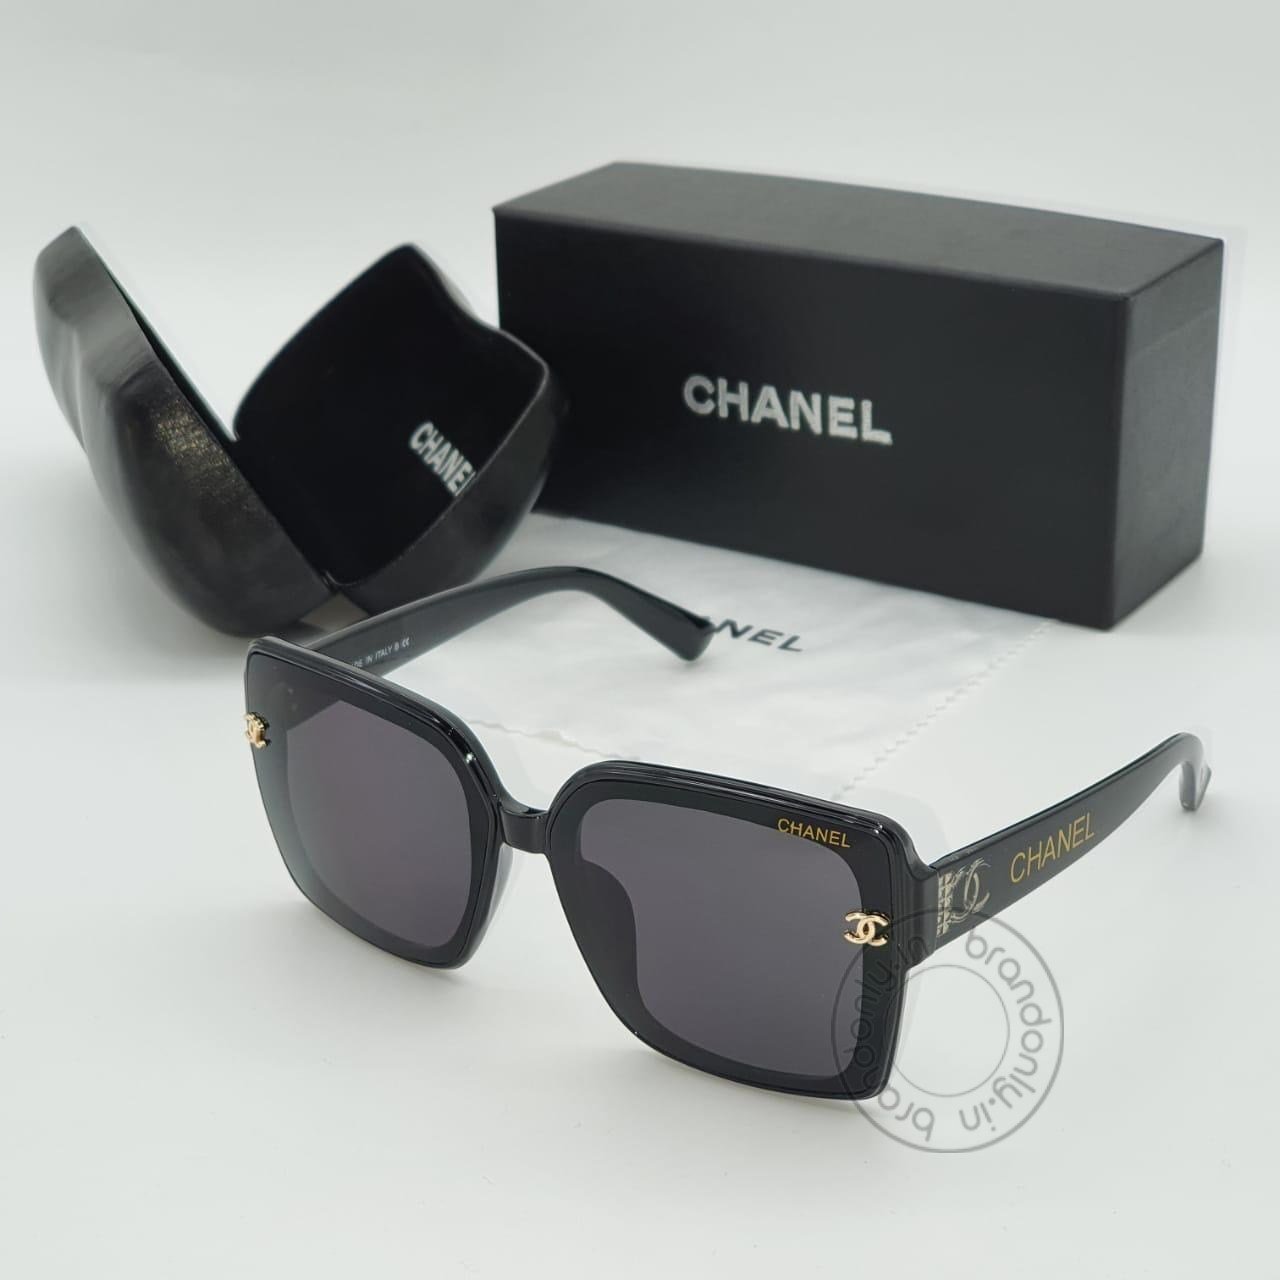 Chanel Black Glass Women's Sunglass for Woman or Girl CHA-10 Black Frame Gift Sunglass